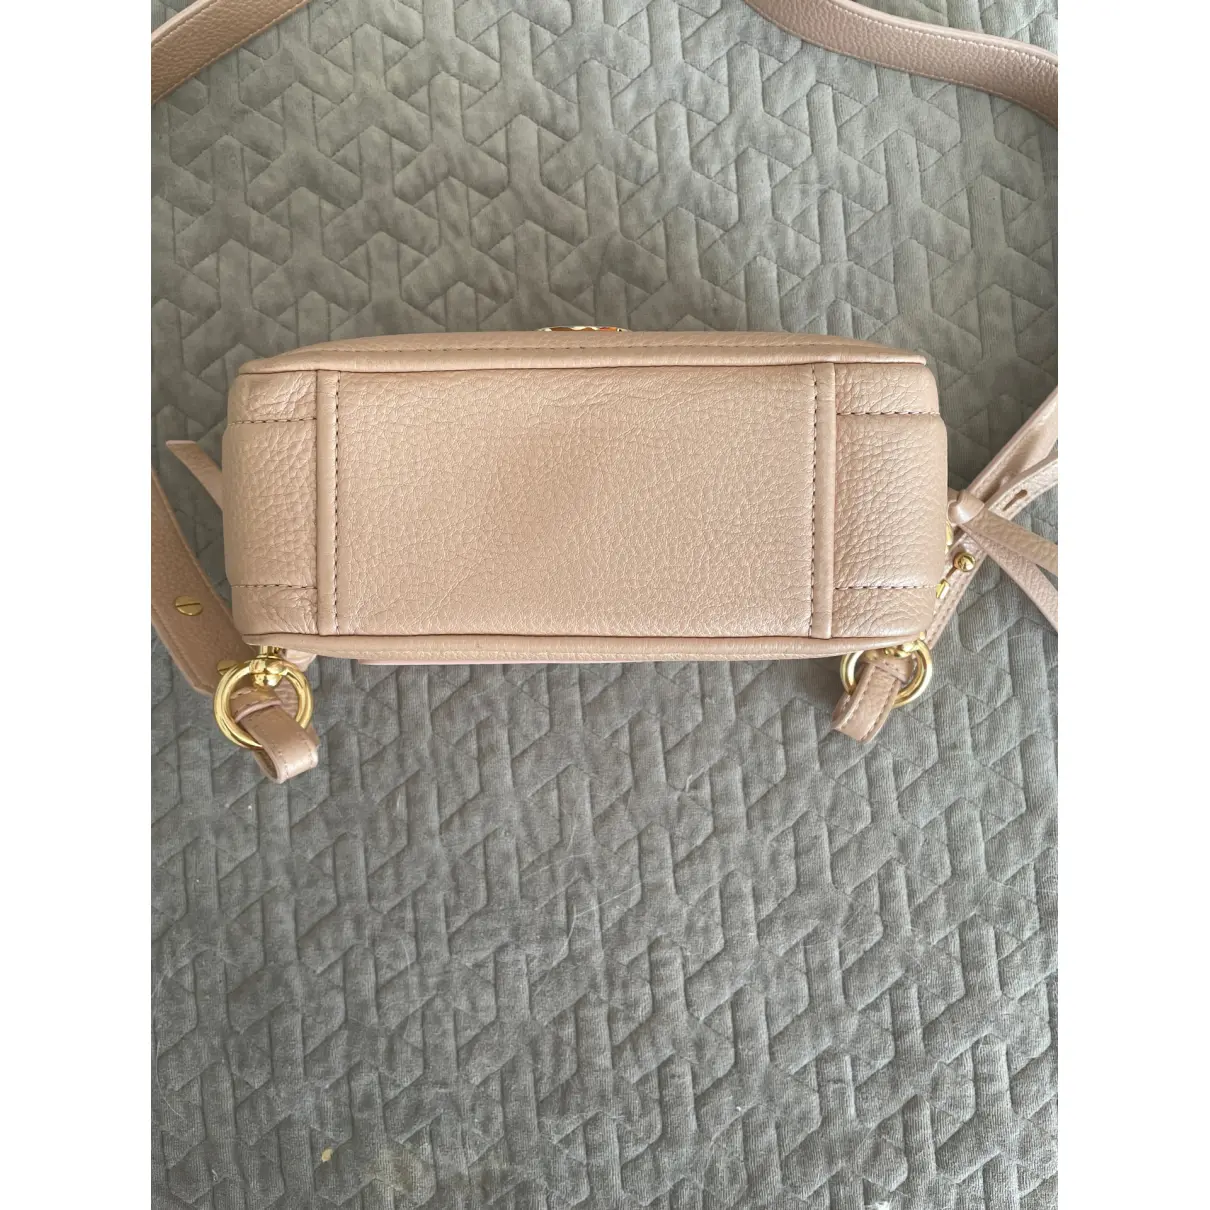 The Softshot leather handbag Marc Jacobs